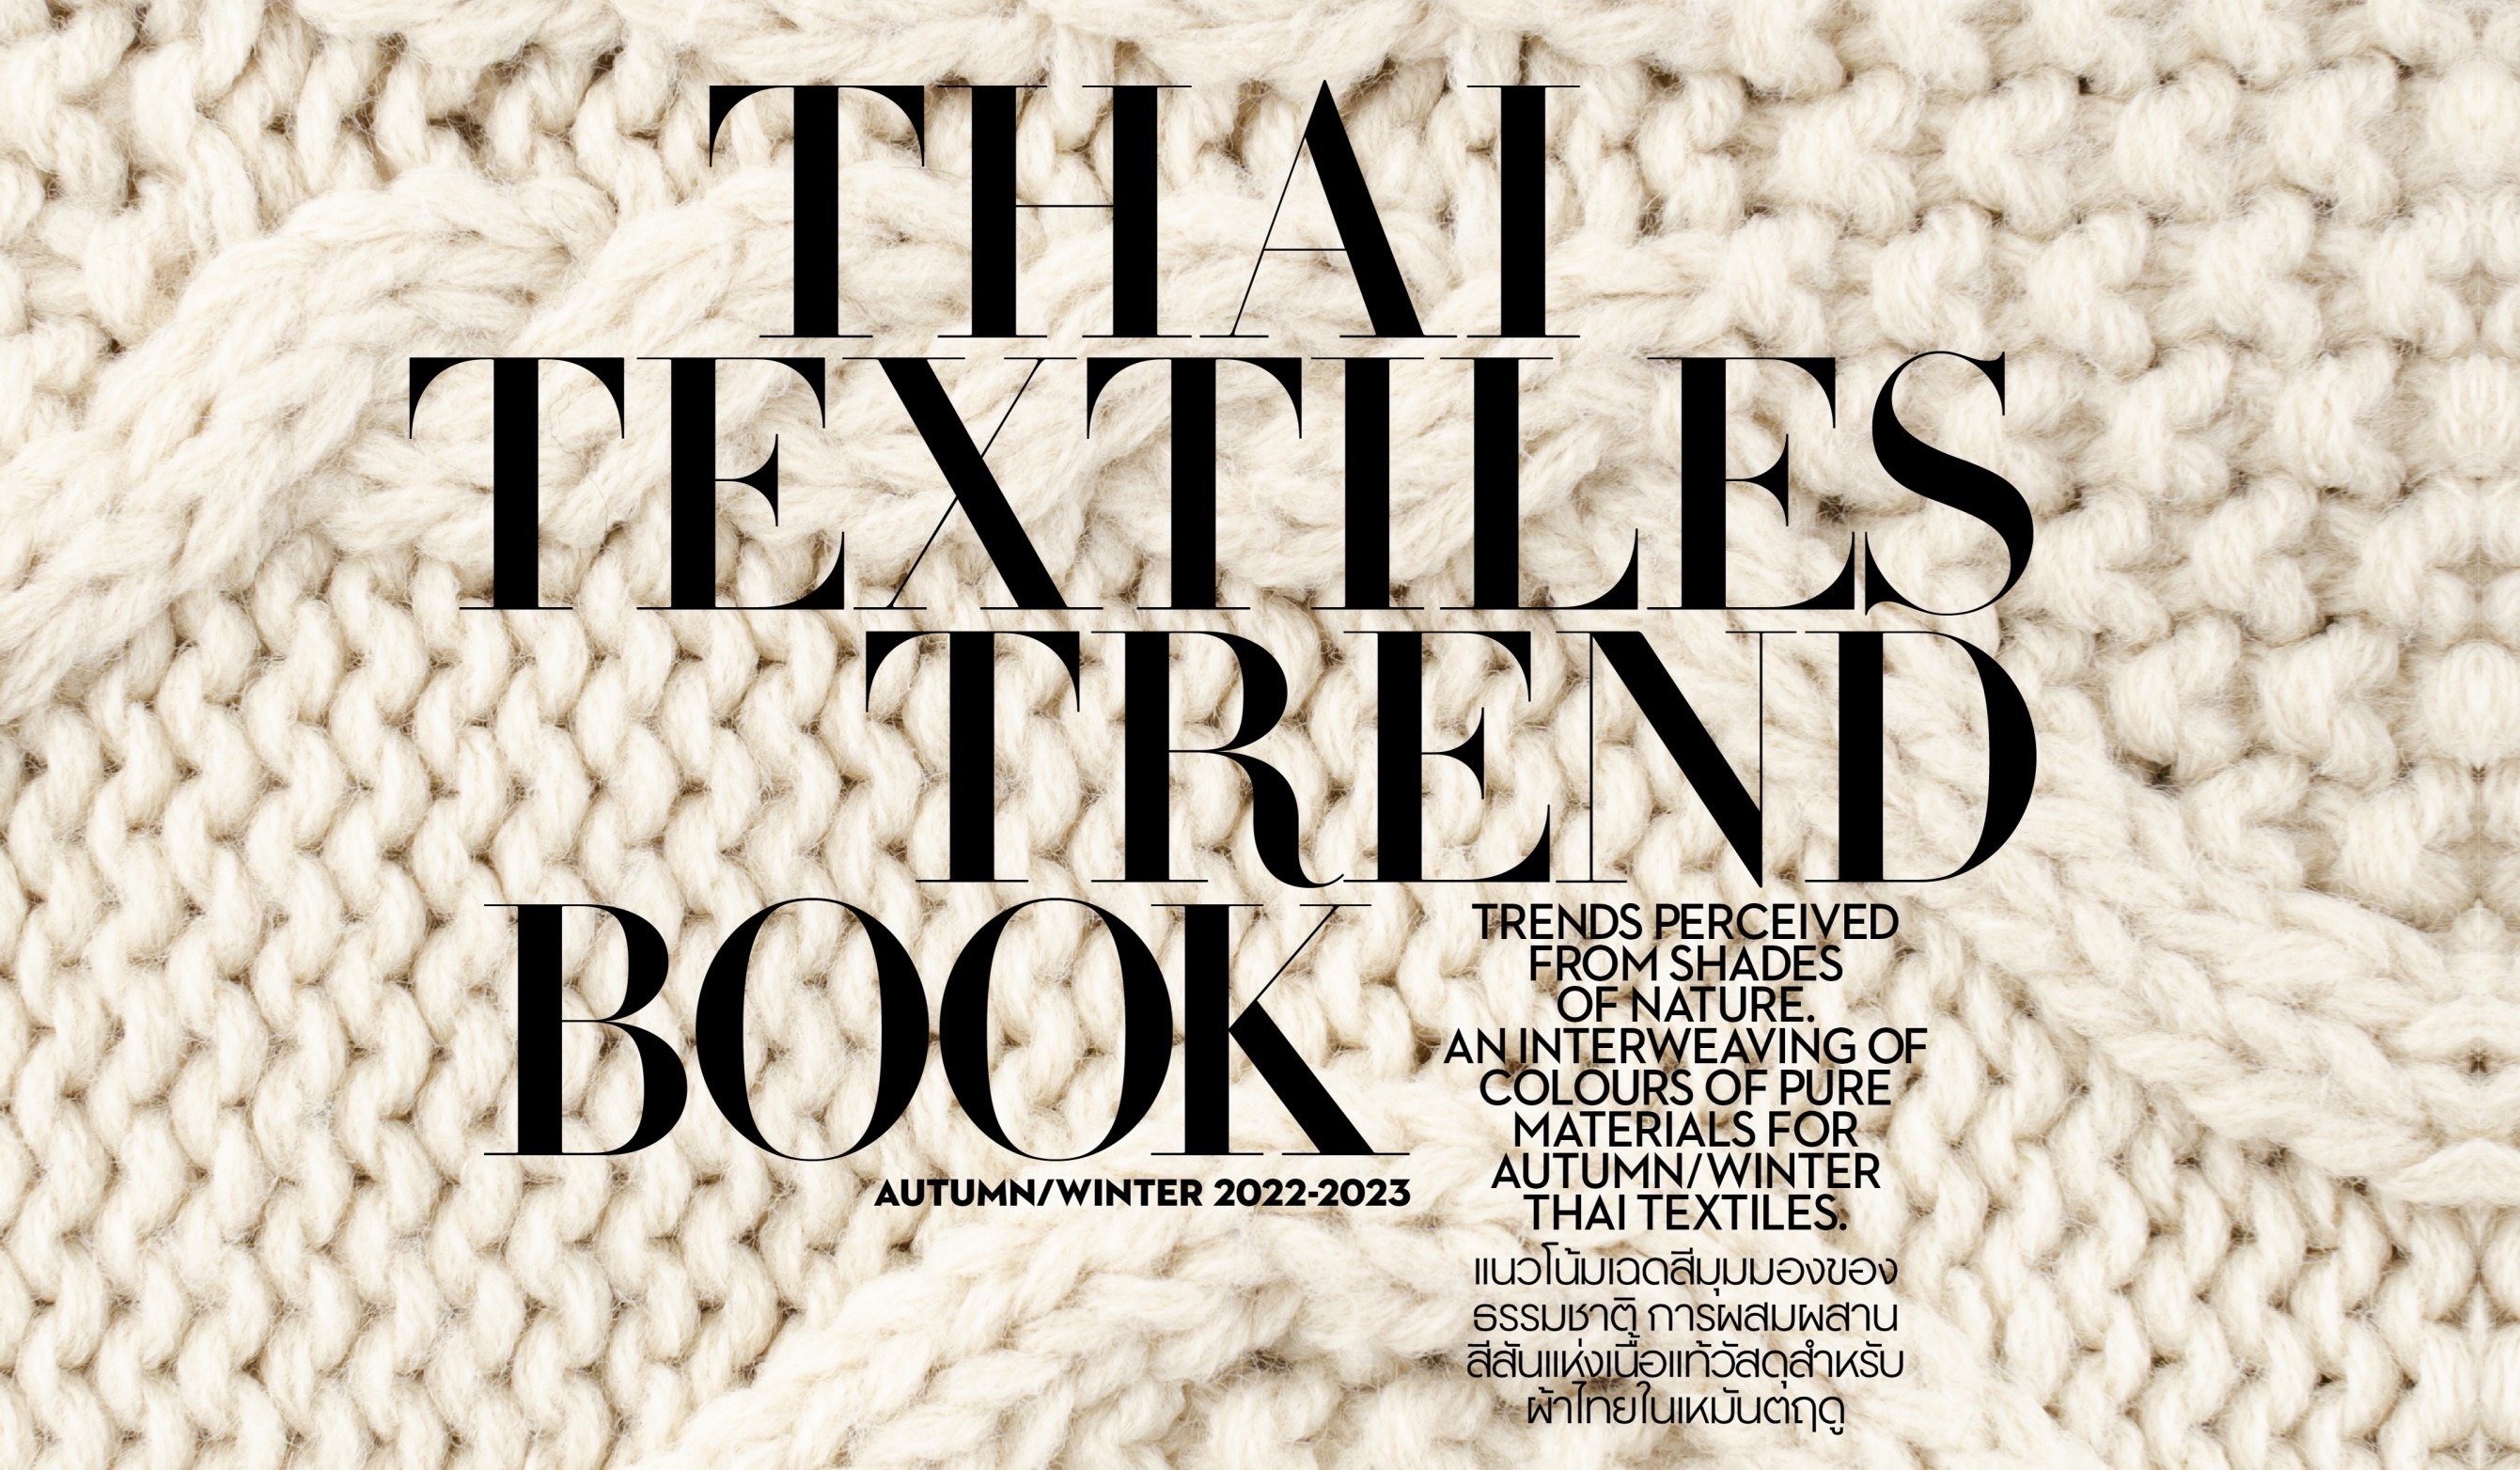 Thai Textiles Trend Book Autumn/Winter 2022-2023